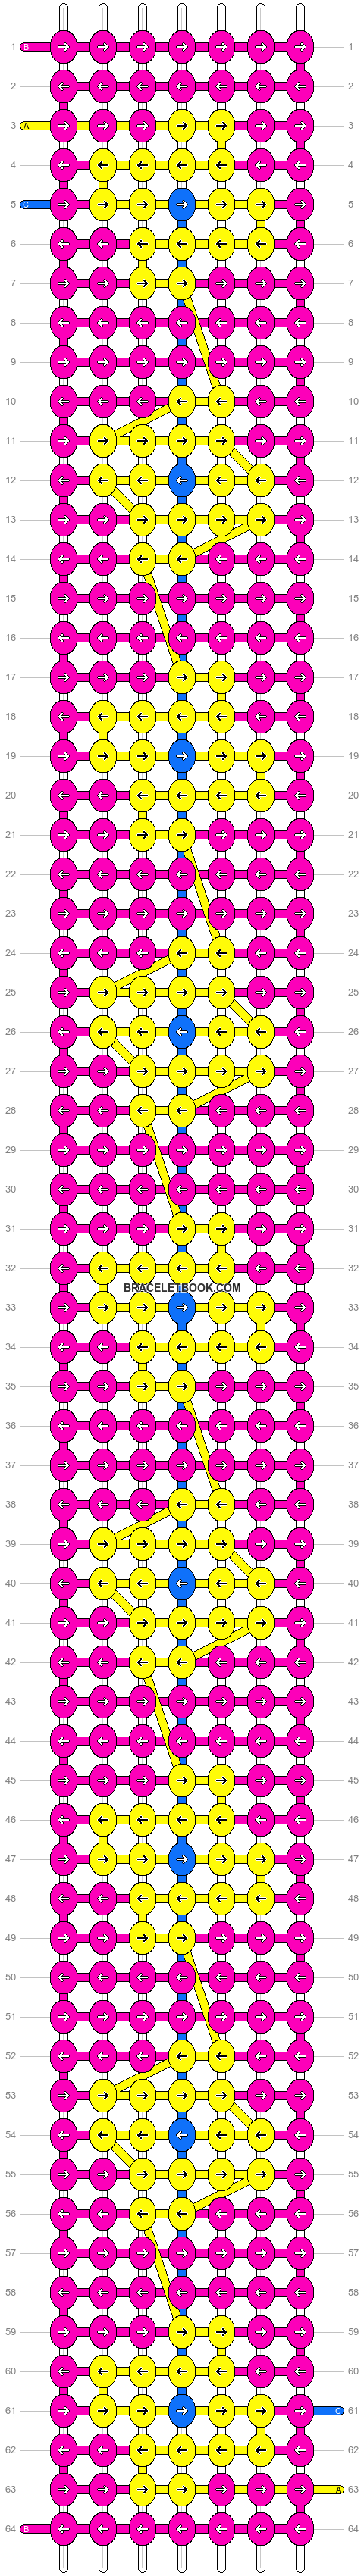 Alpha pattern #31379 variation #33100 pattern